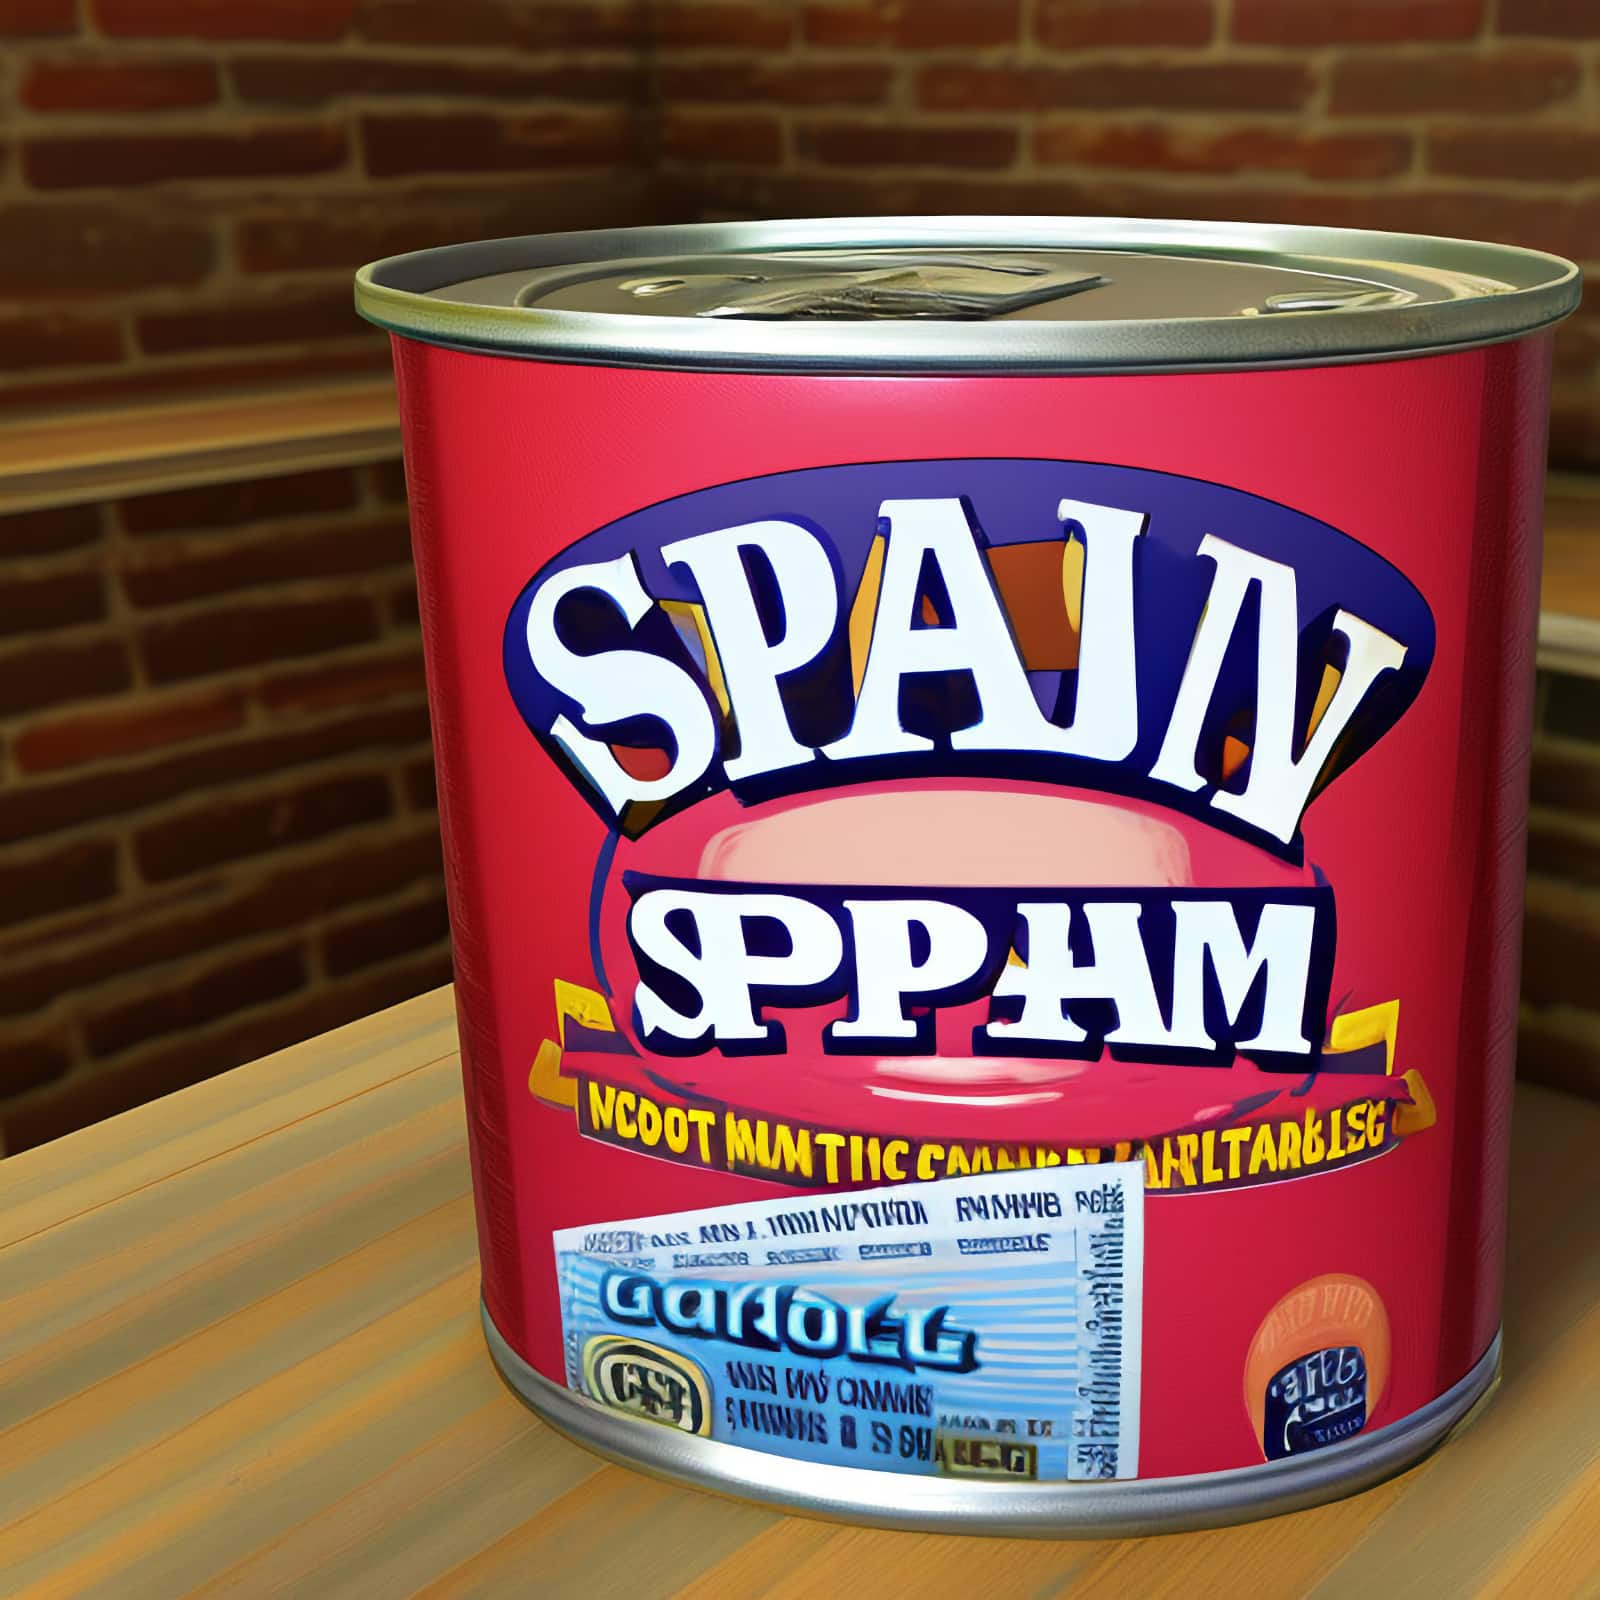 Can of SPAM - sorta. AI